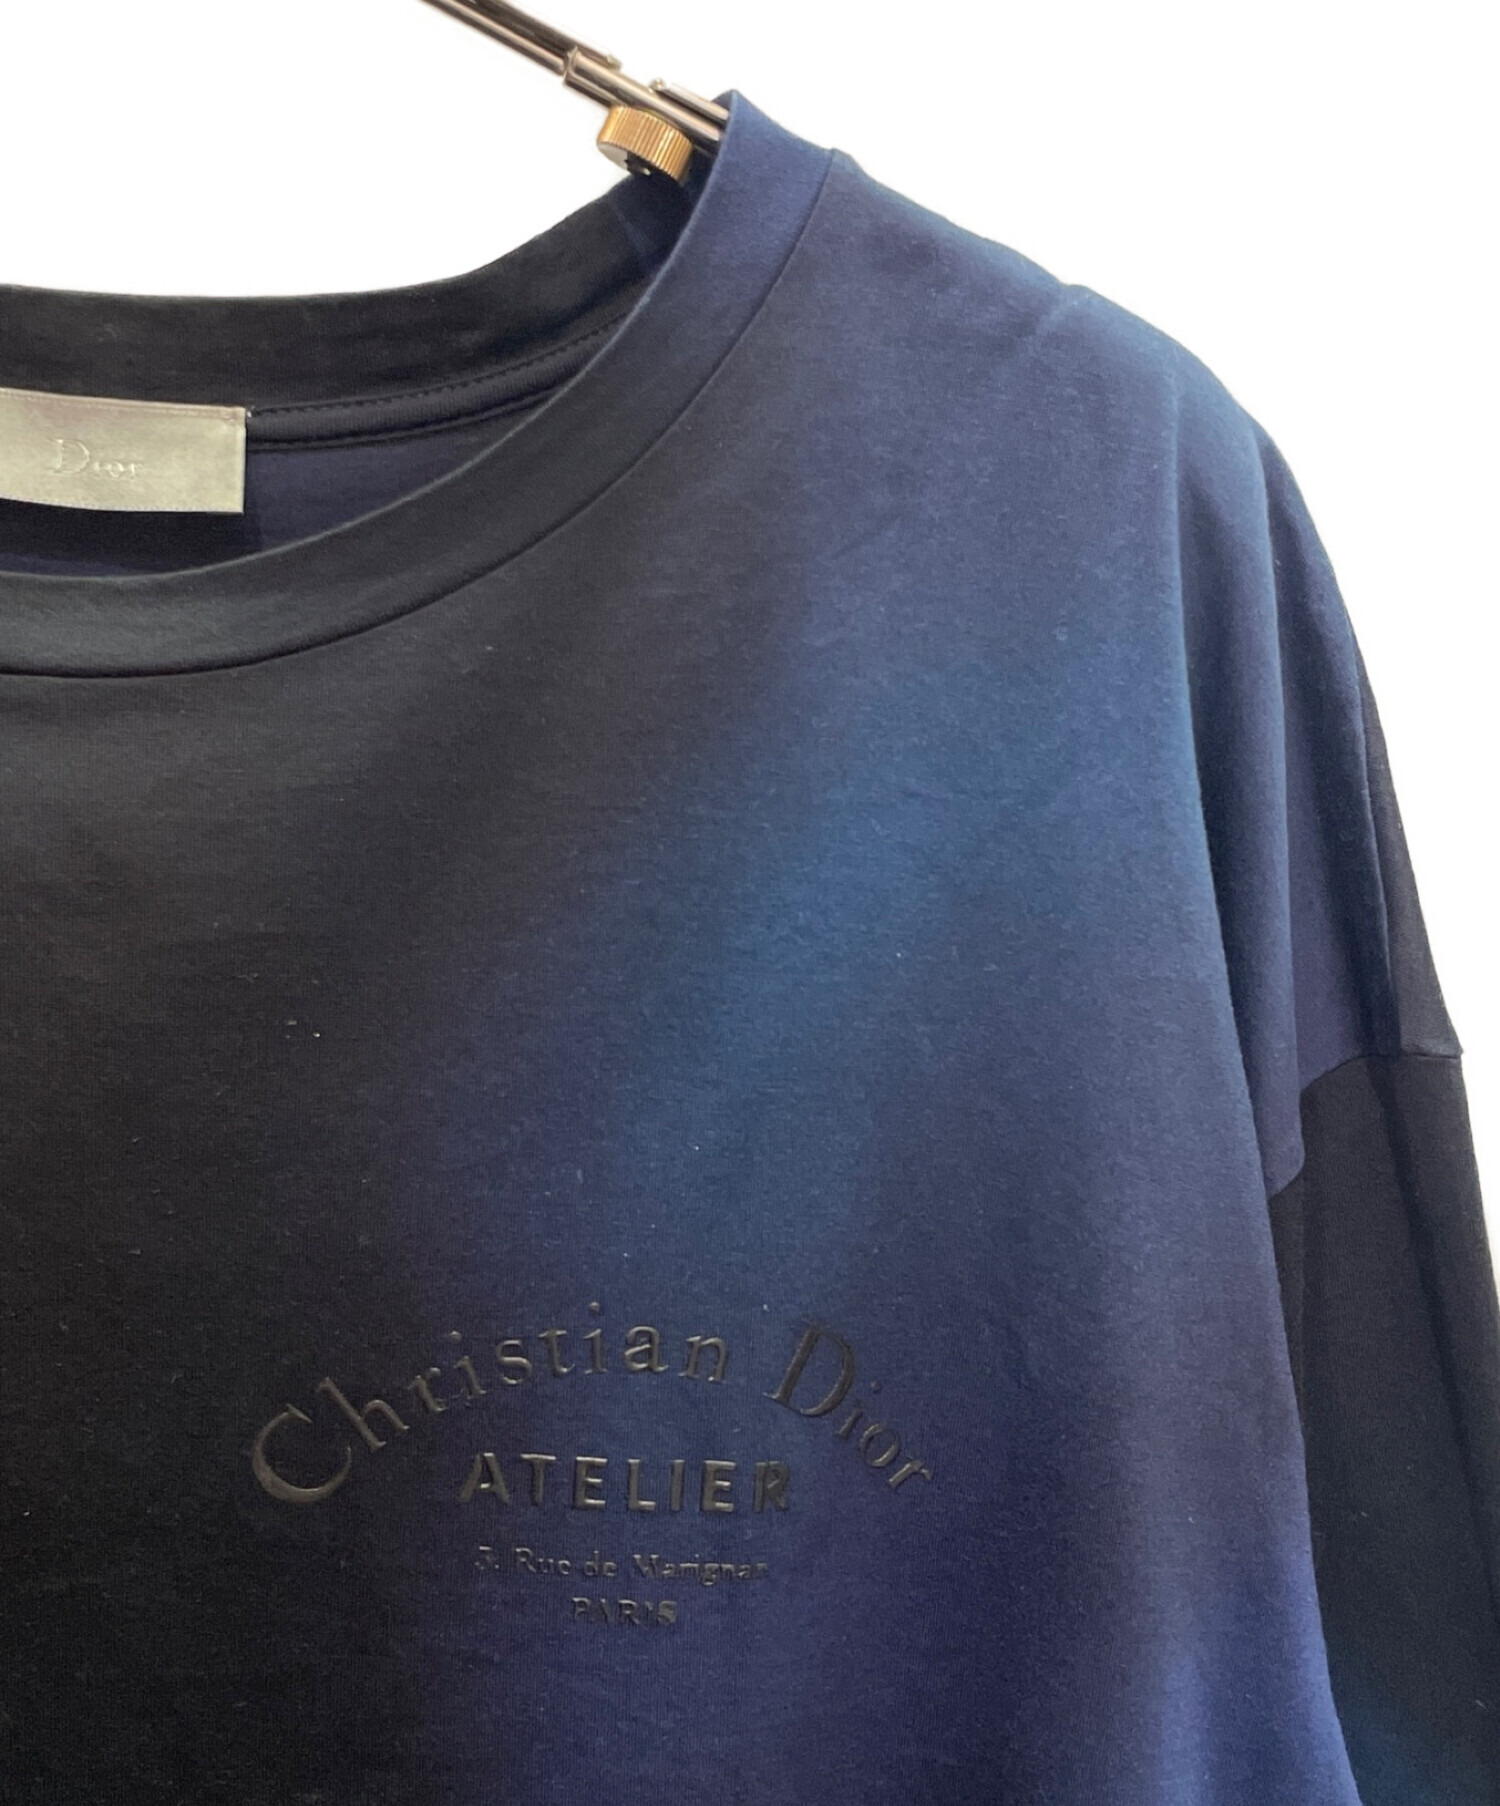 Dior (ディオール) ATELIER プリント グラデーション Tシャツ ネイビー サイズ:XL